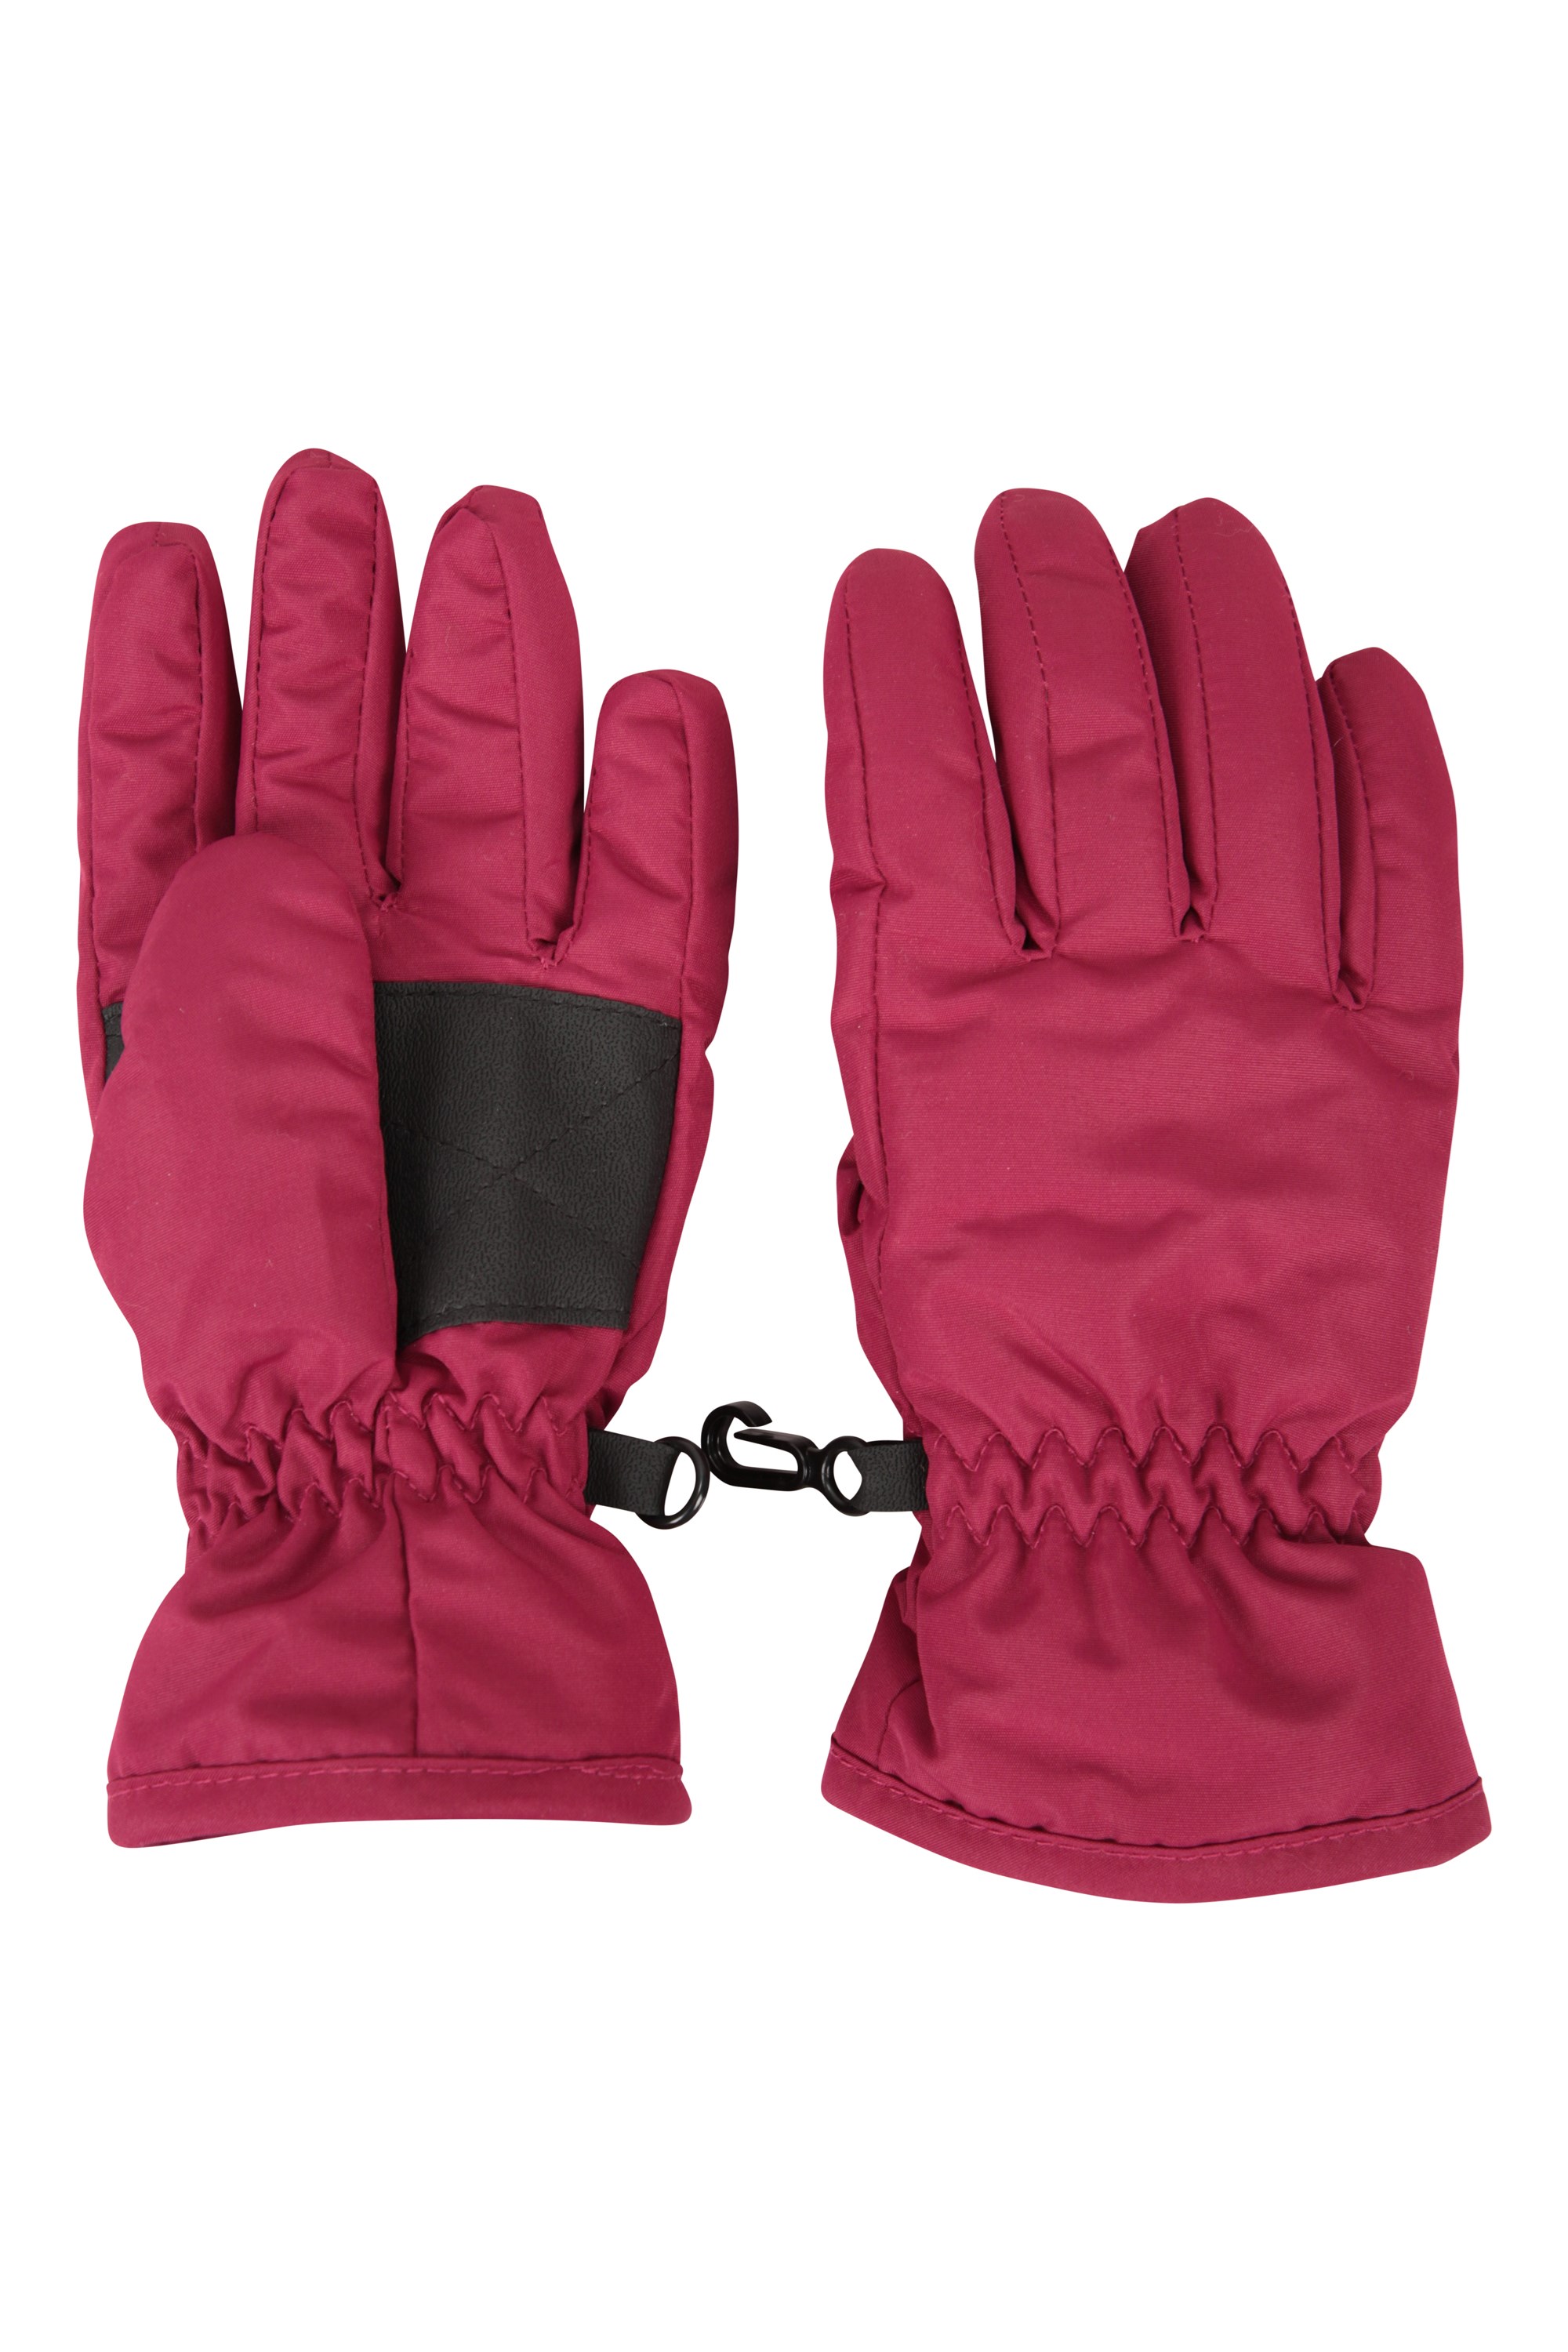 Mountain Warehouse Kids Snow Mittens Fleece Lined Adjustable Cuffs Snow Proof Ski Gloves 